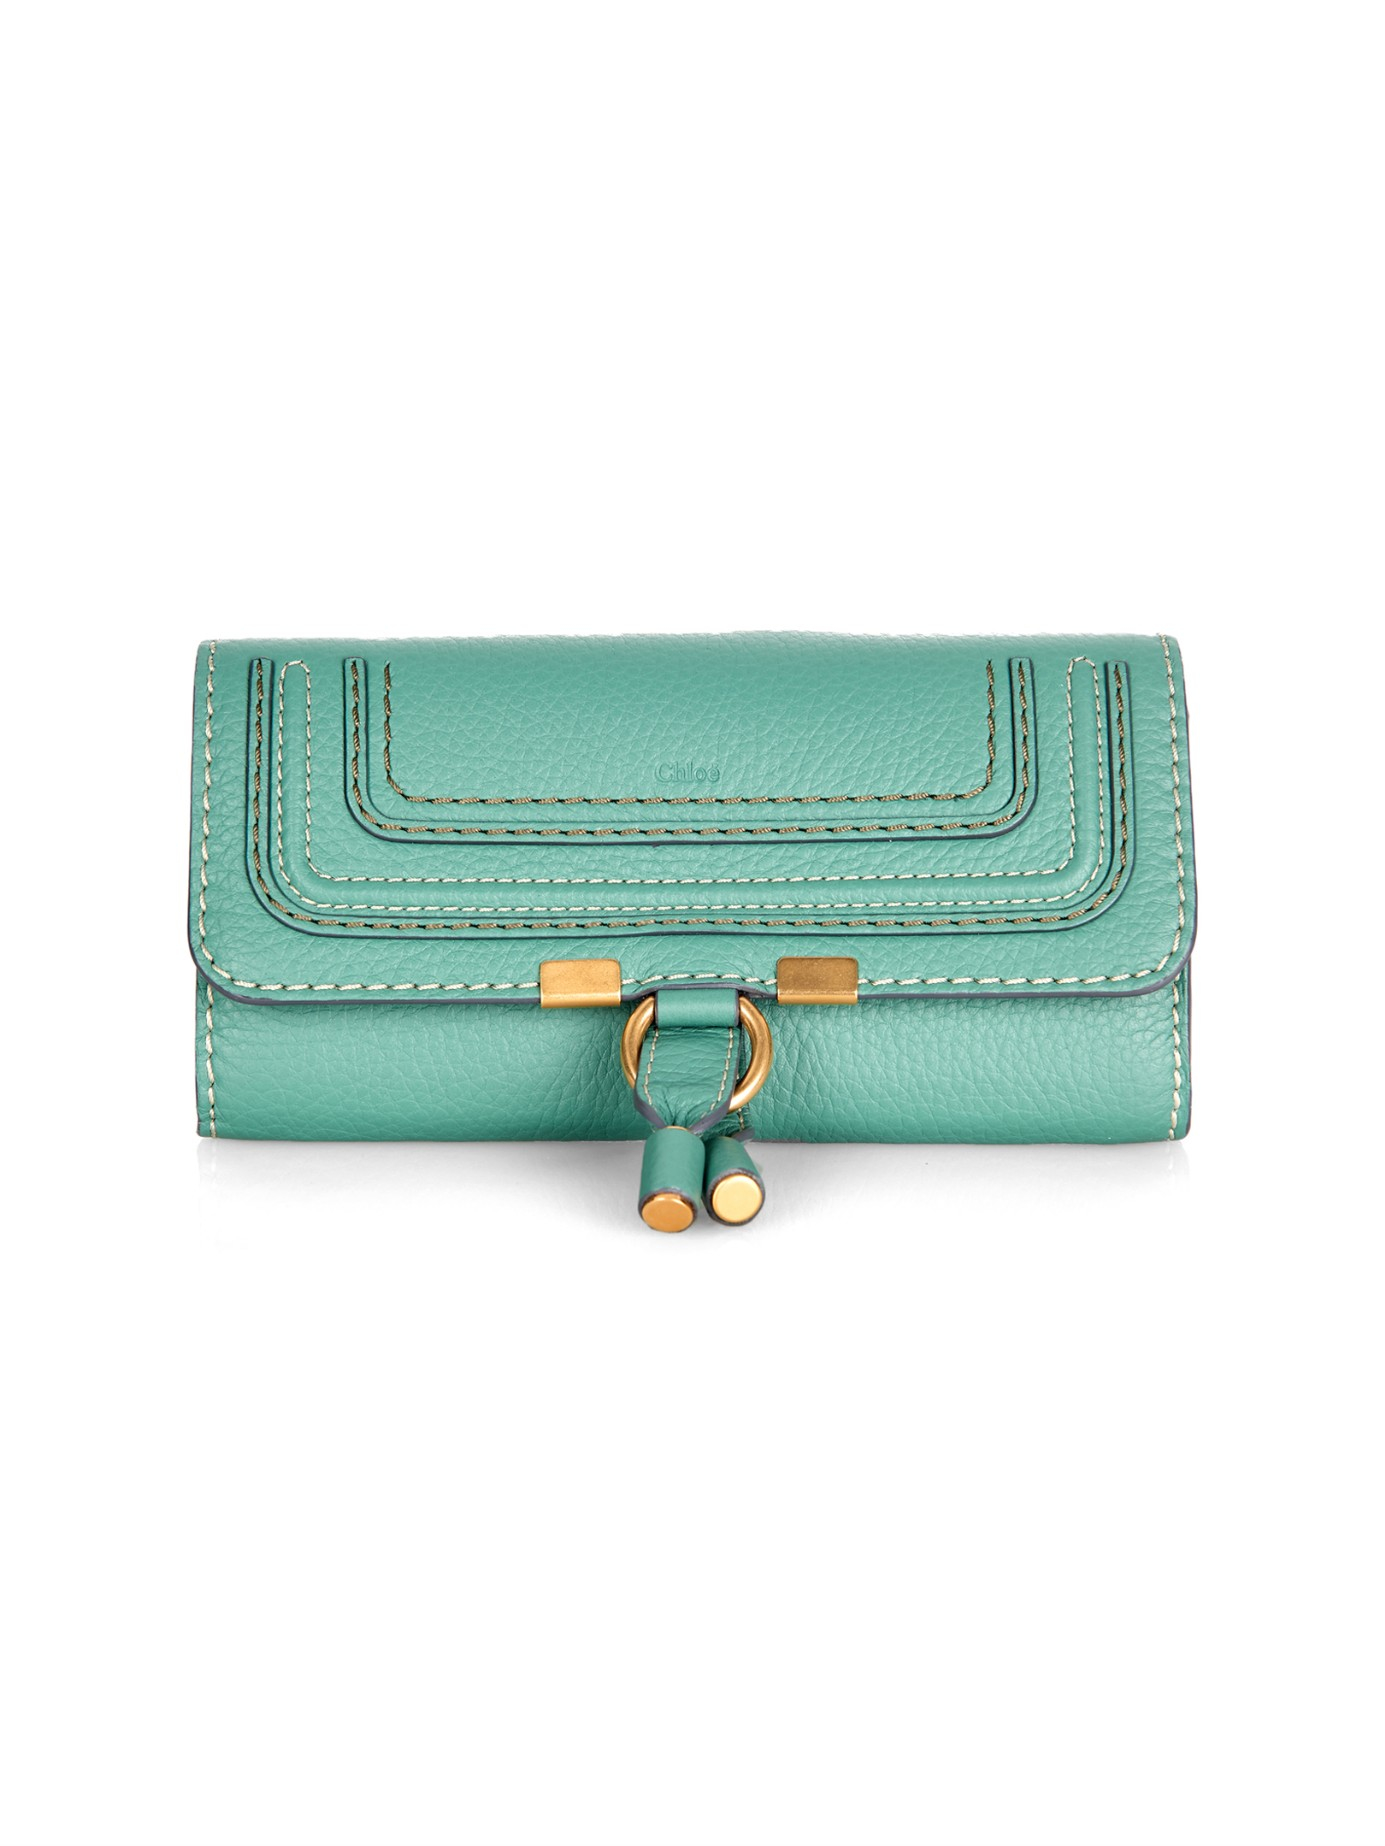 knock off chloe bag - Chlo Marcie Leather Wallet in Green | Lyst